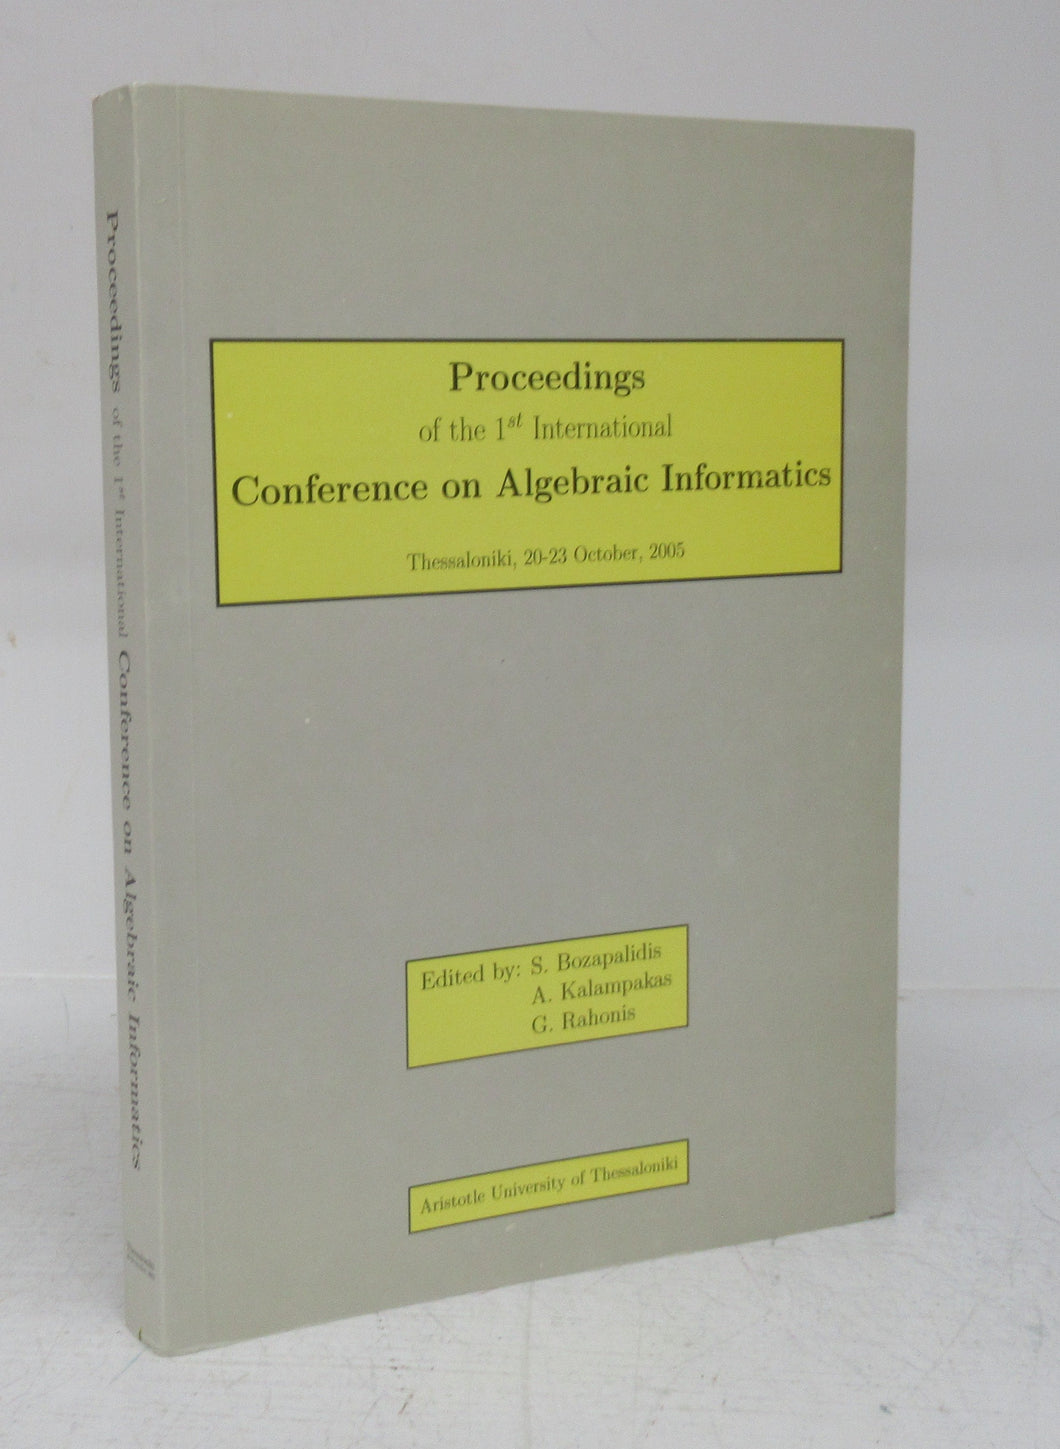 Proceedings of the 1st International Conference on Algebraic Informatics, Thessaloniki, 20-23 October, 2005